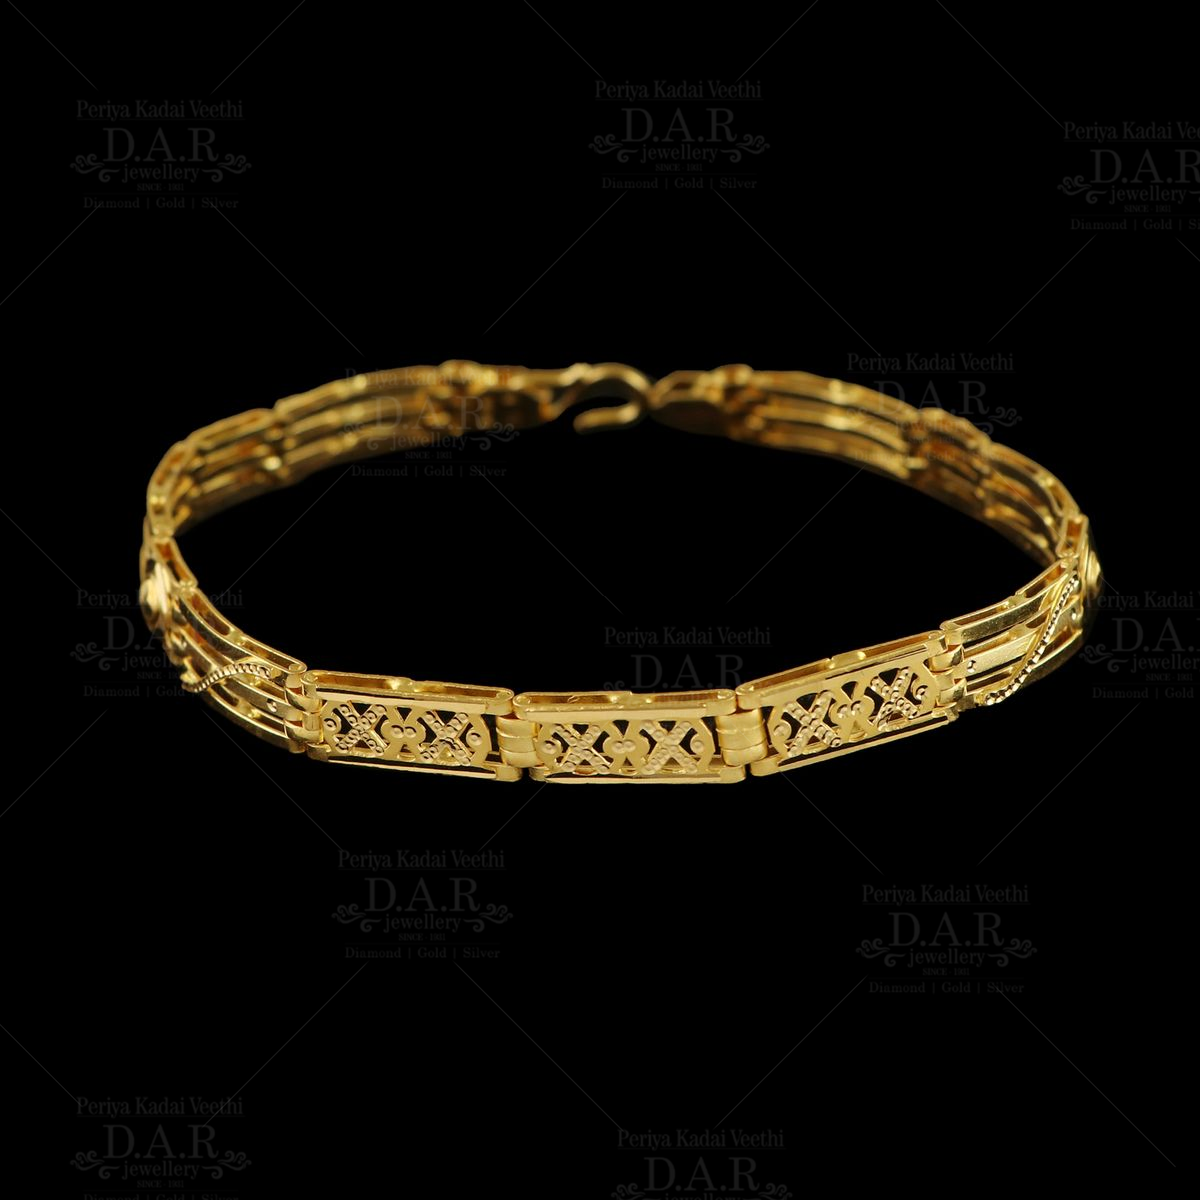 Universe Jewelry - Gold Diamond Bracelet 0.82 CT. T.W. Model Number : 2362